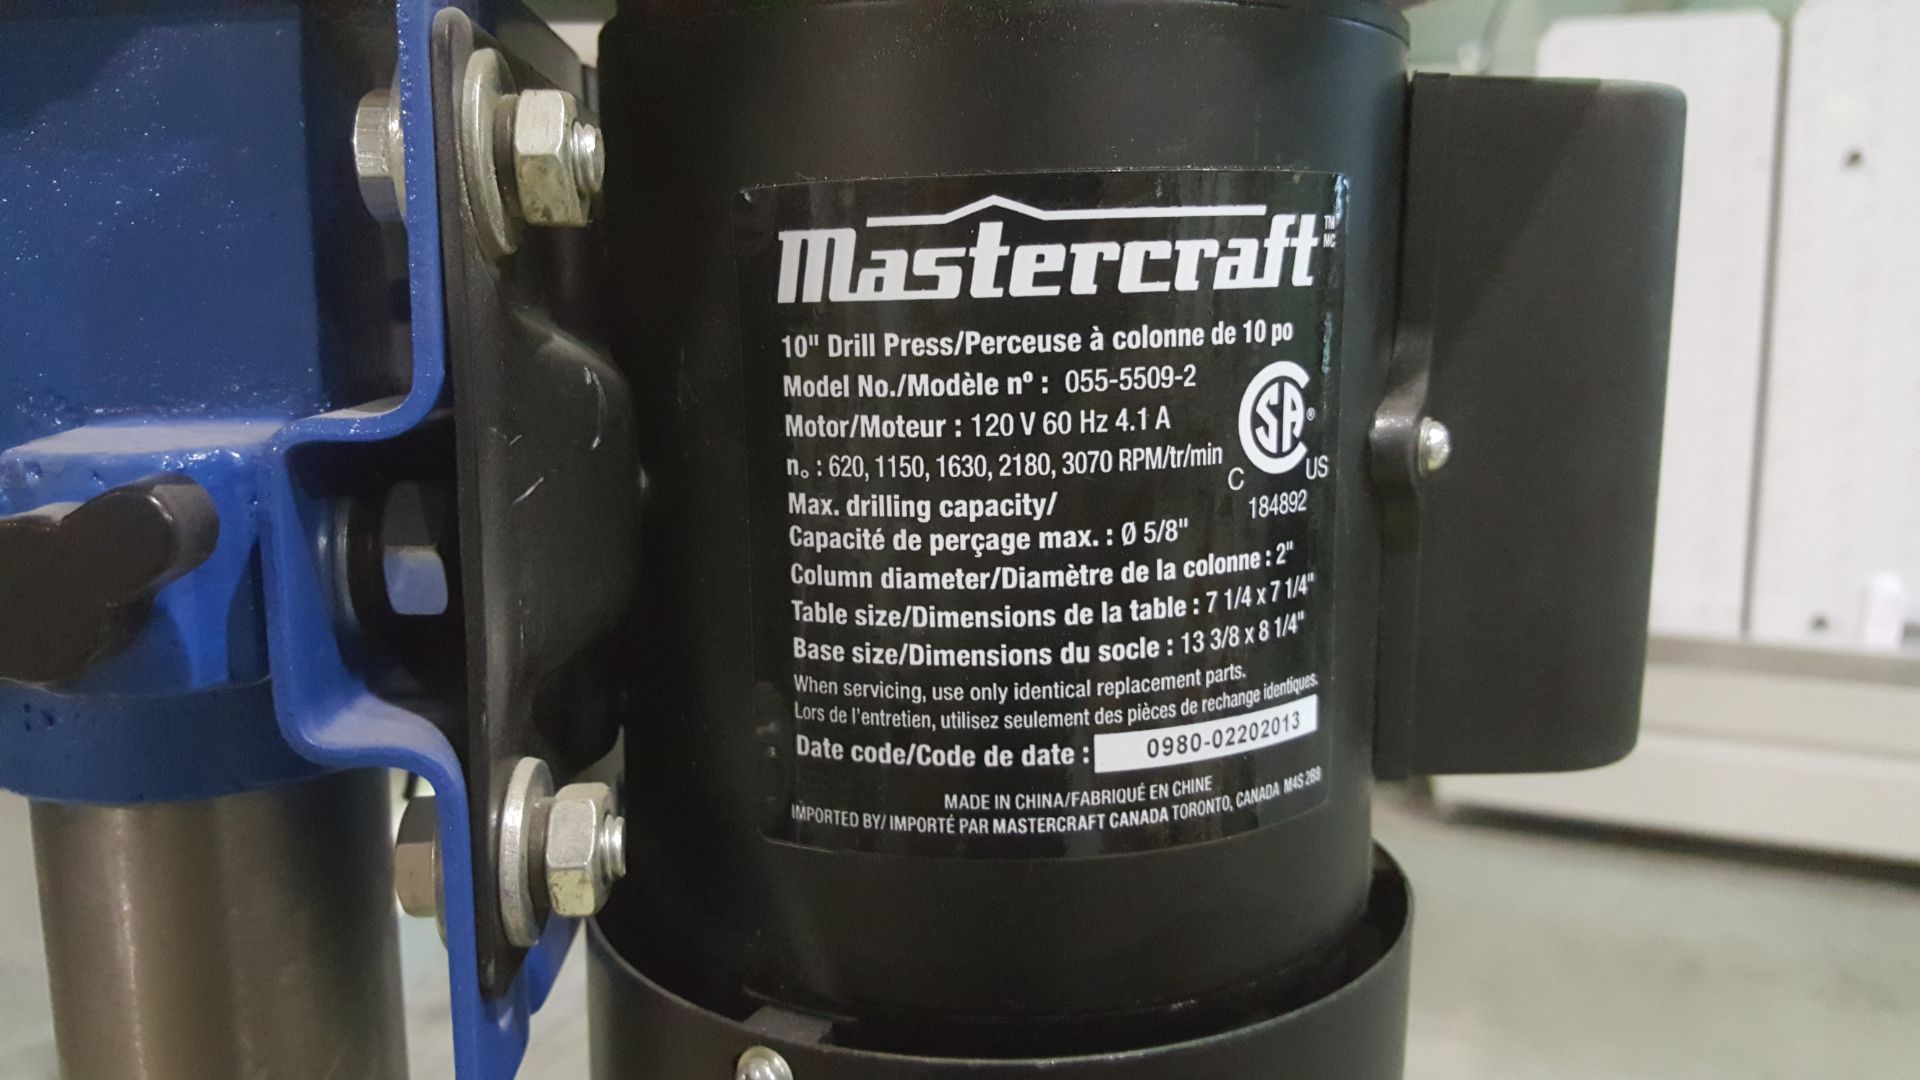 Mastercraft 10" drill press s/n.055-5509-2 - Image 2 of 2